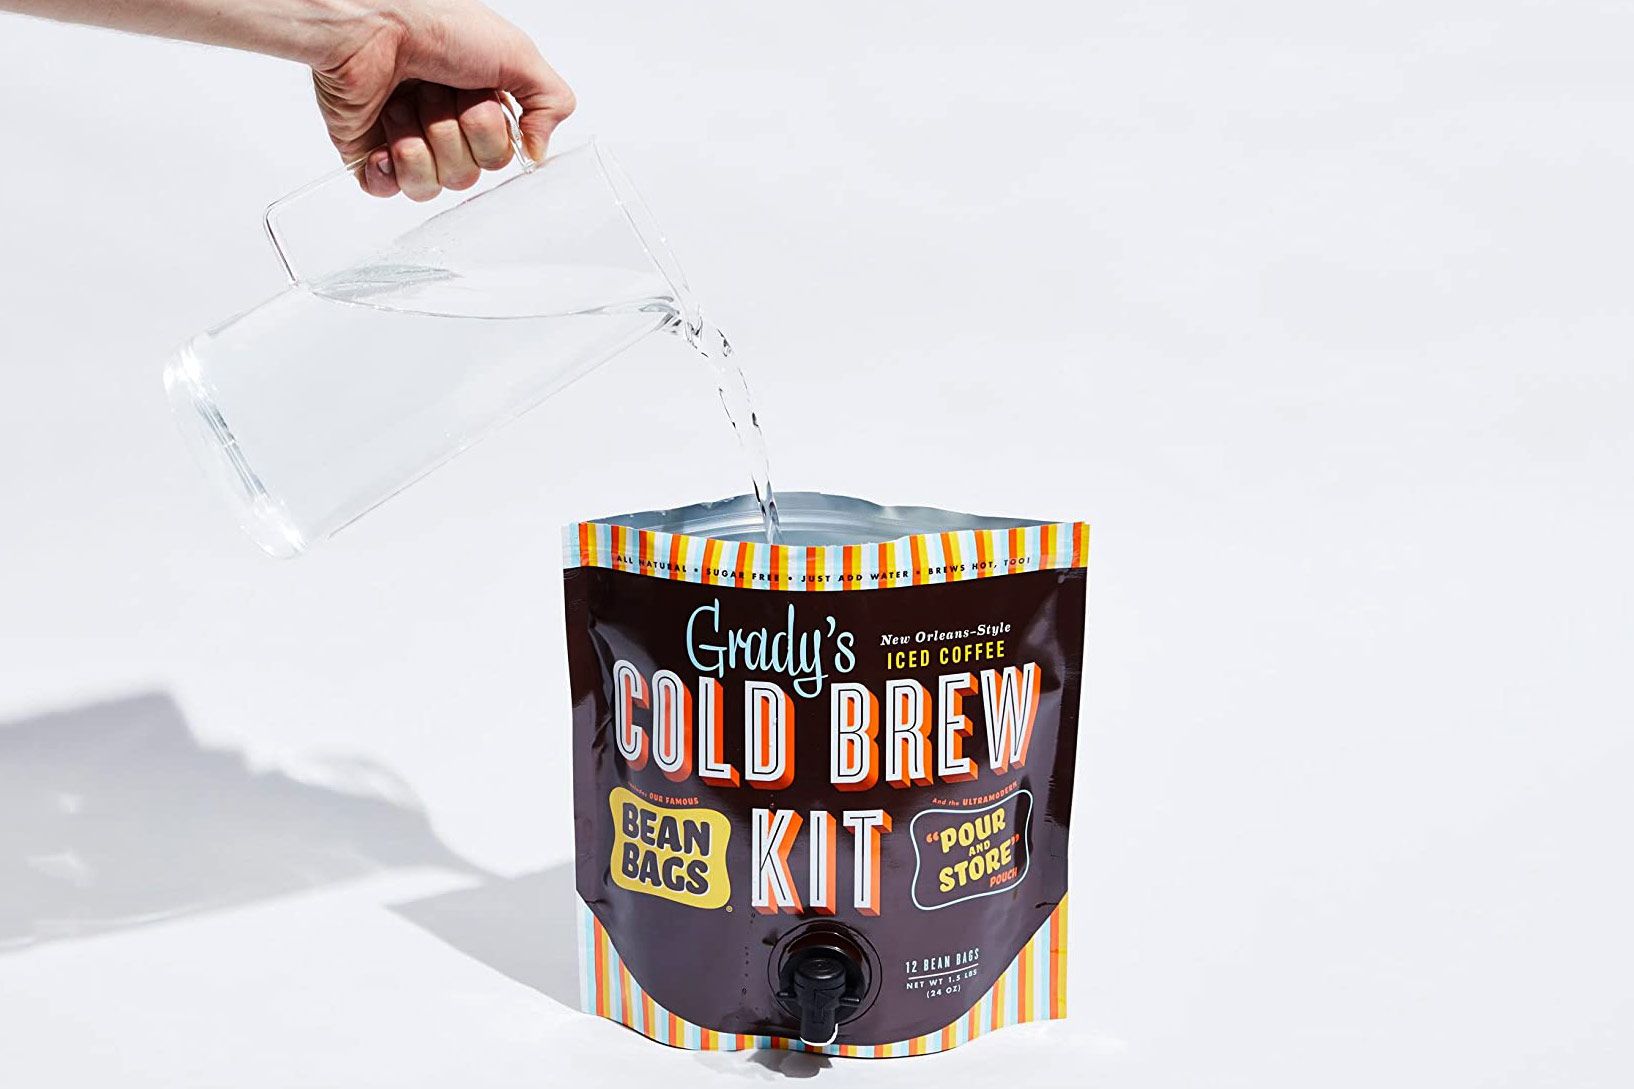 Grady's Iced Coffee, Cold Brew Kit - 12 bags [1.5 lbs (24 oz)]